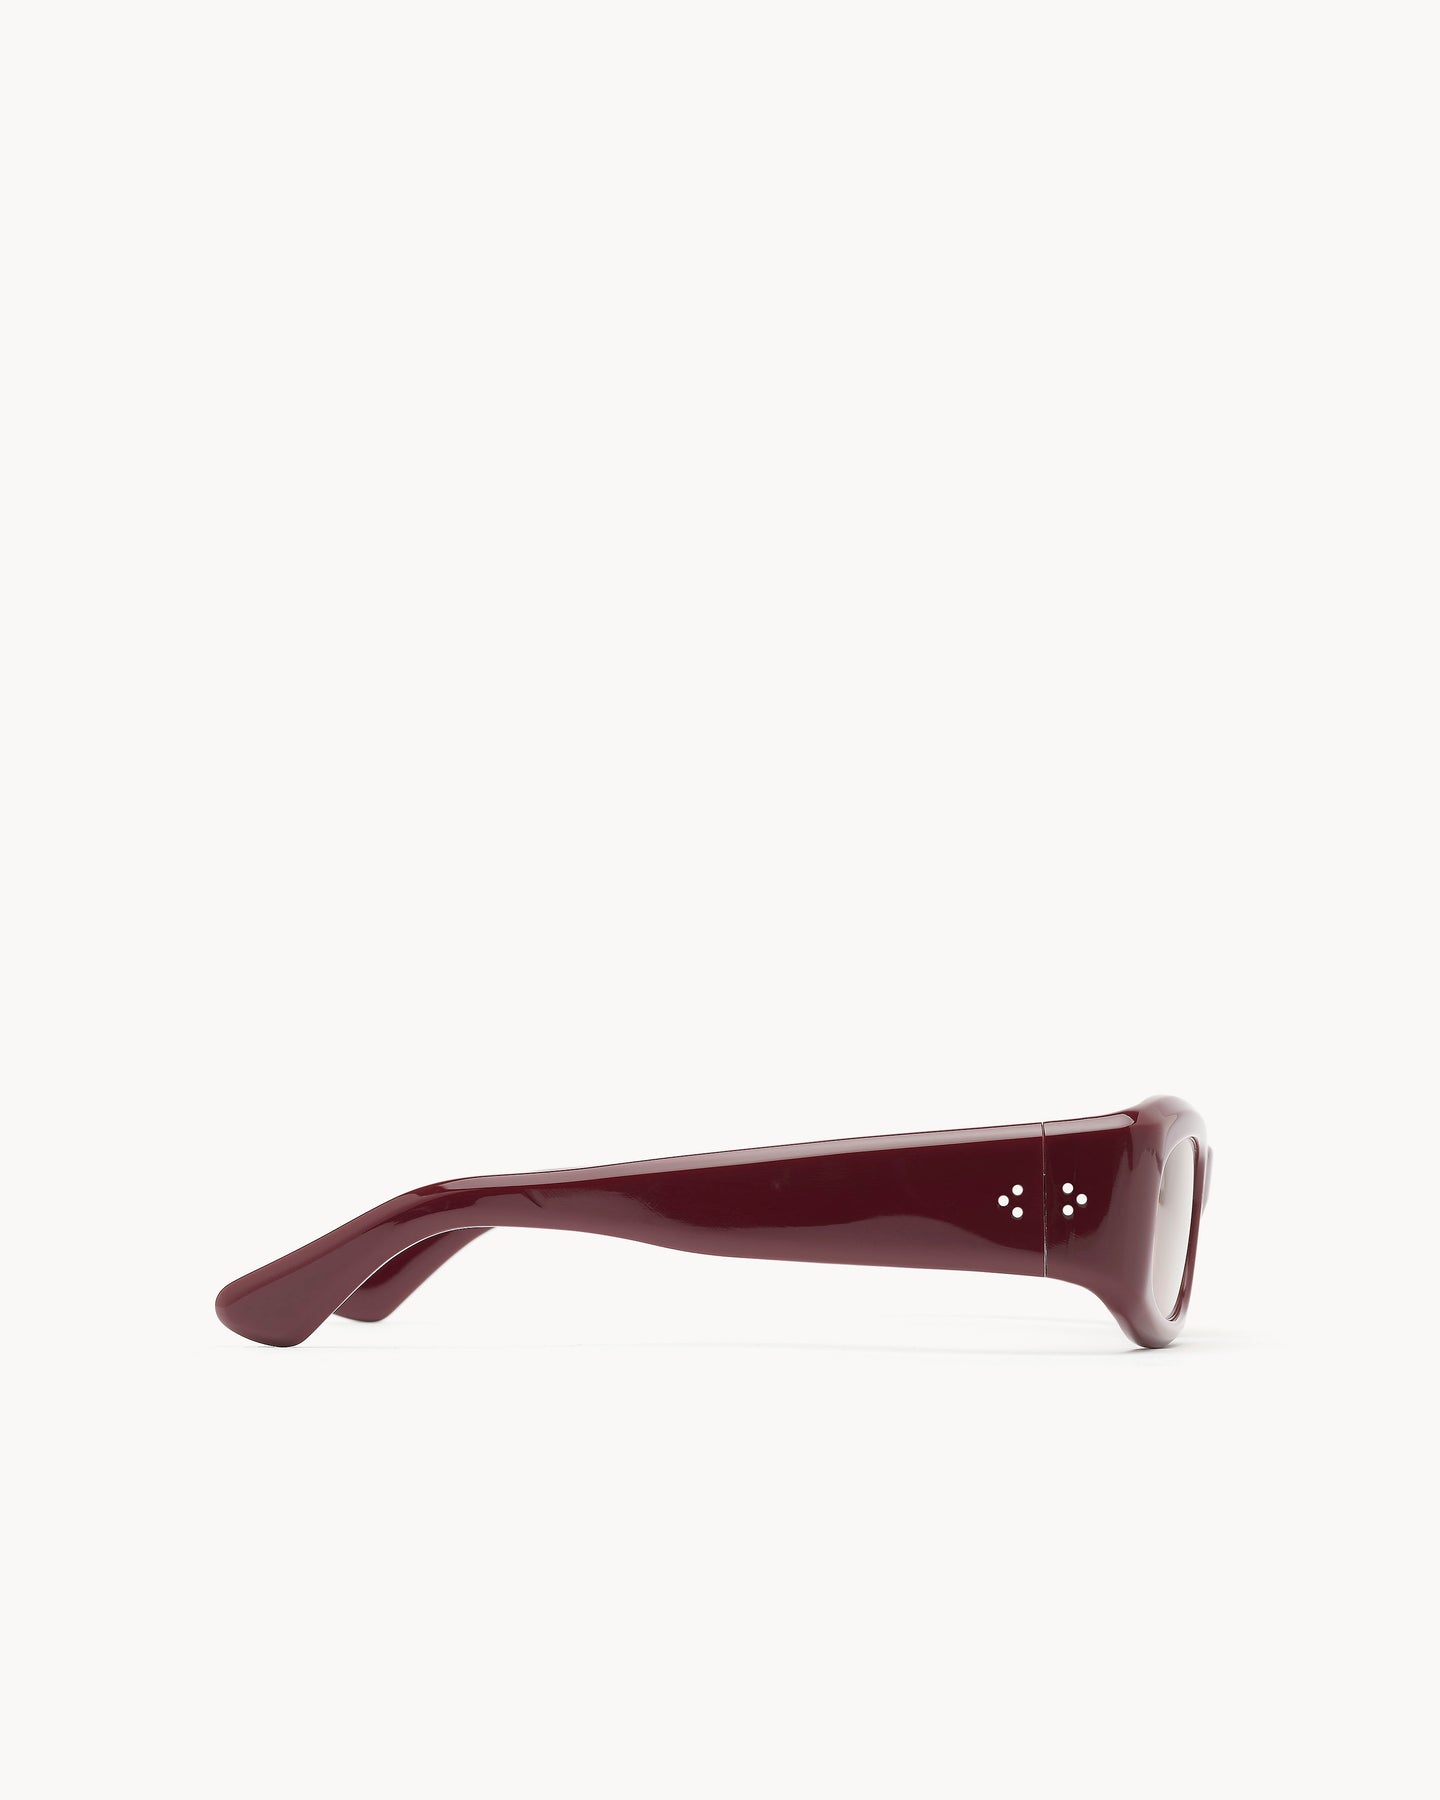 Port Tanger Saudade Sunglasses in Burgundy Acetate and Amber Lenses 4